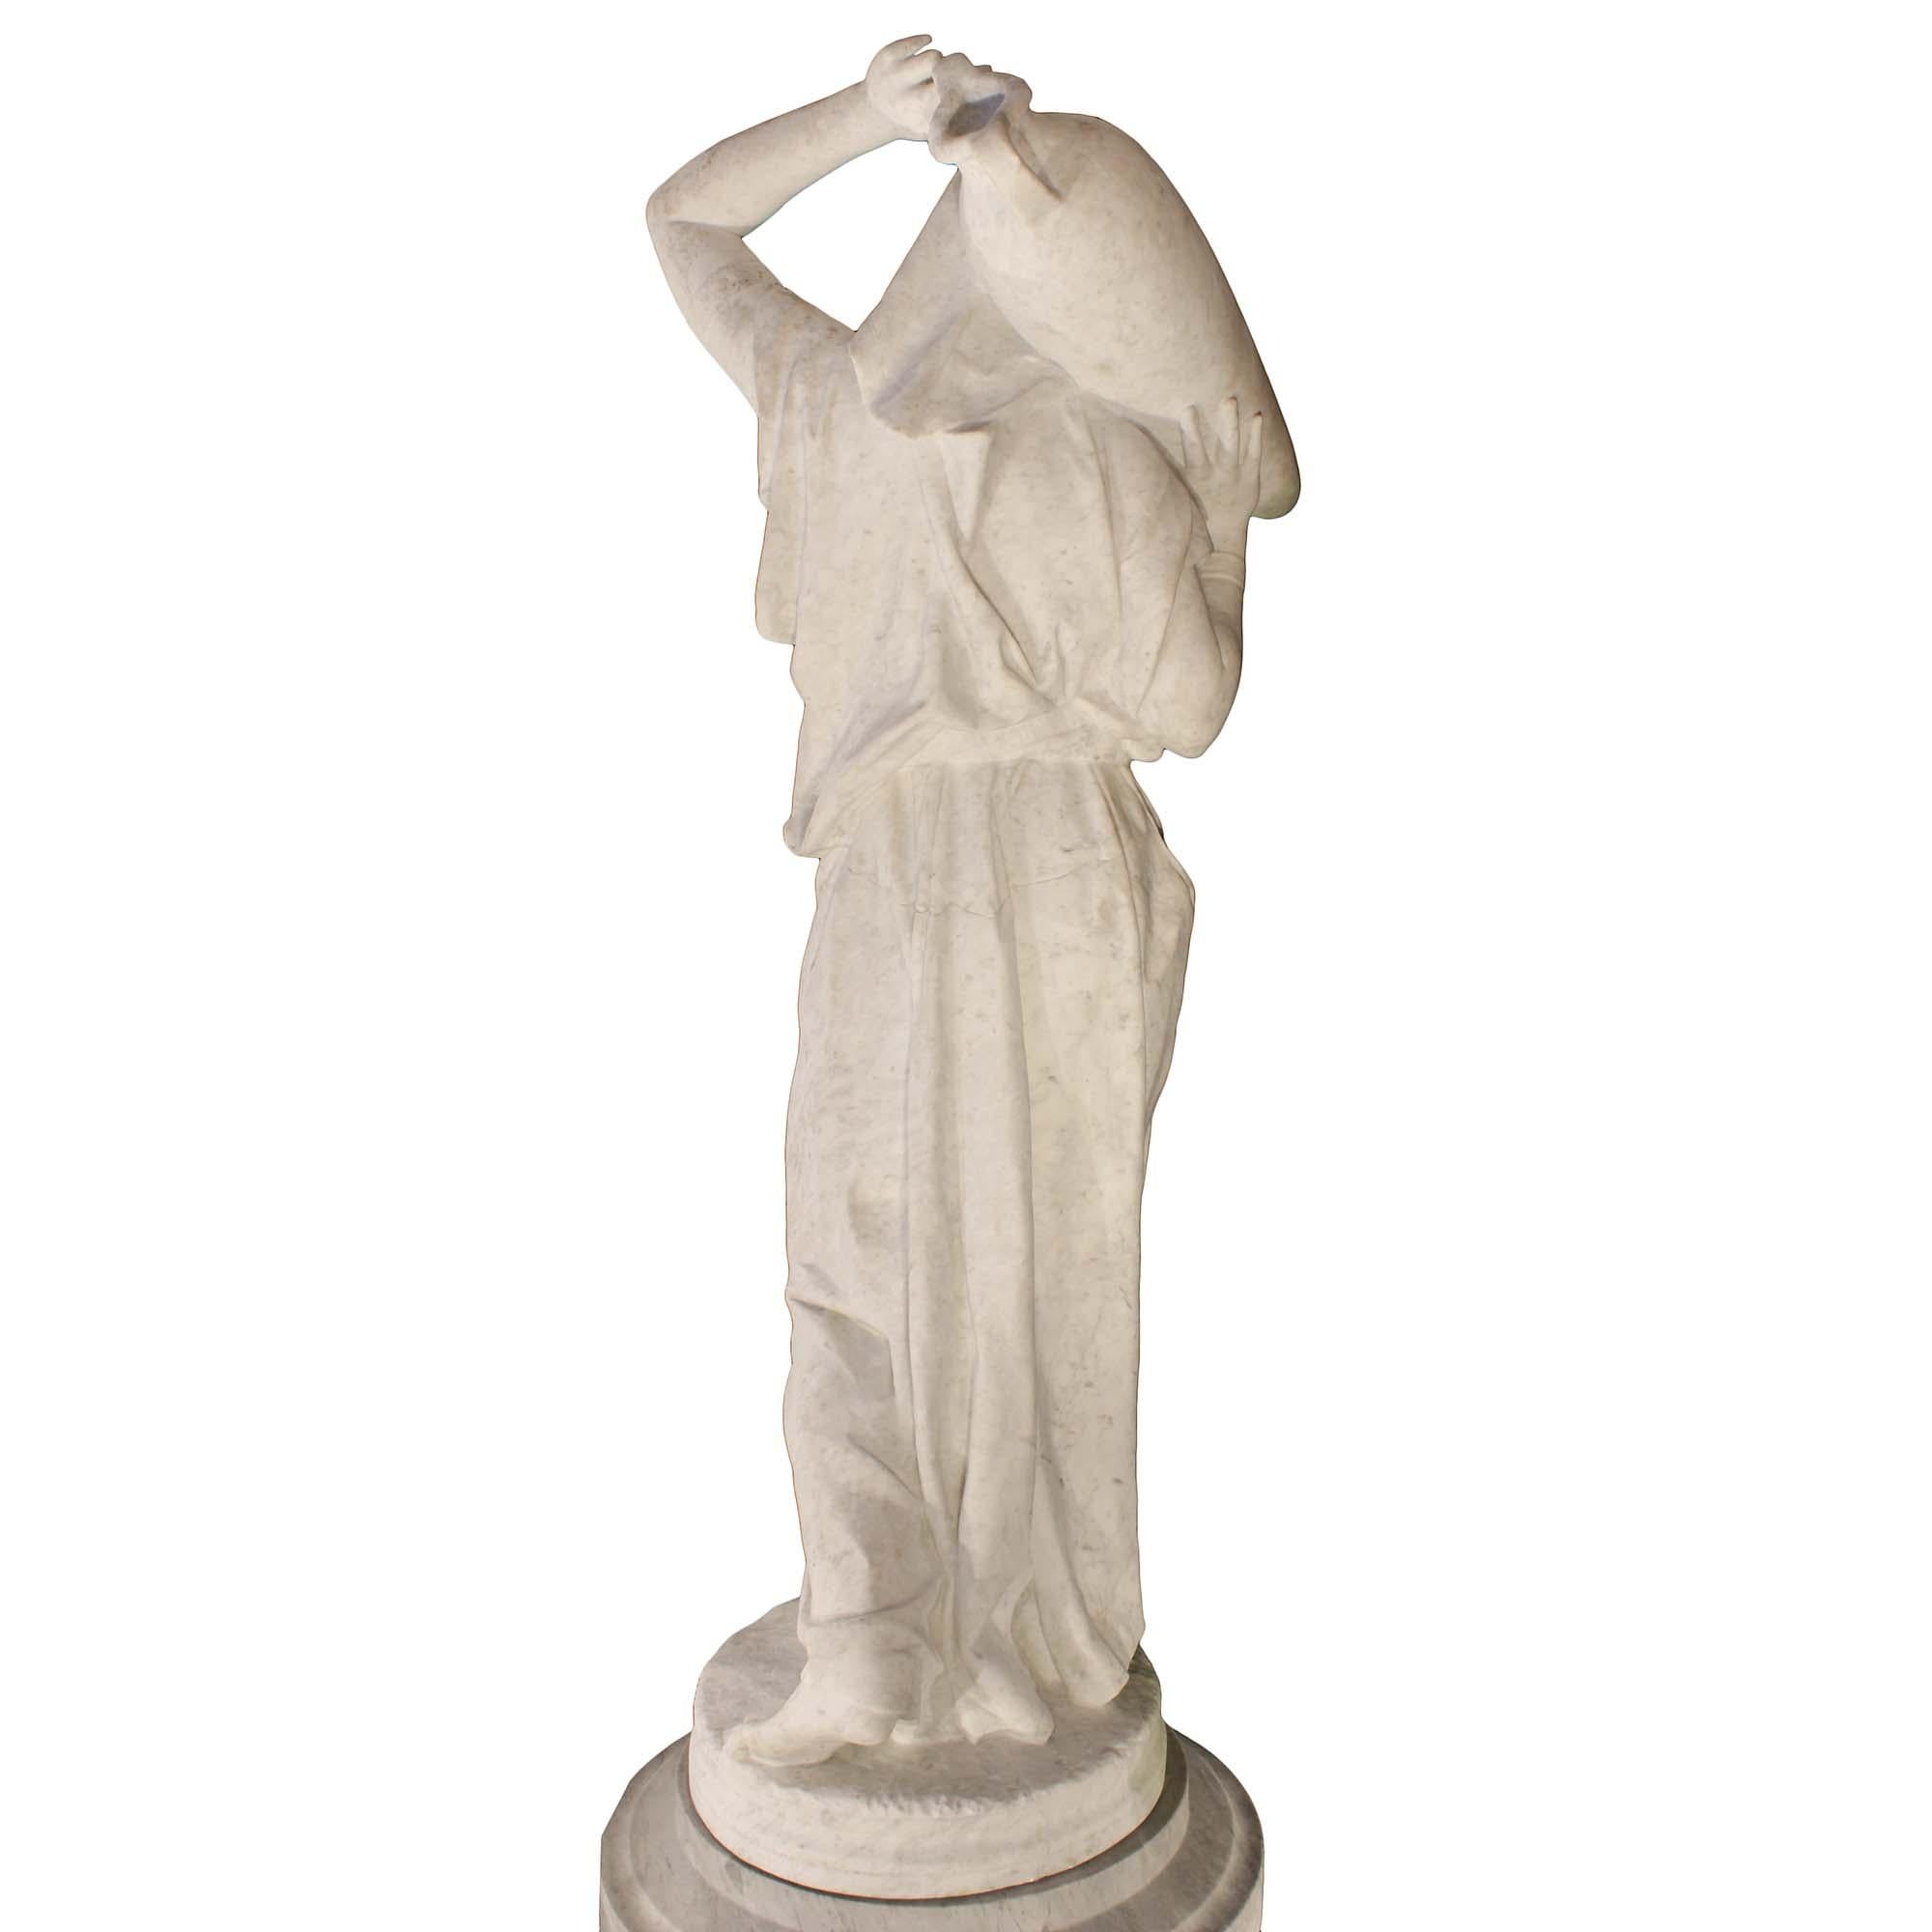 Italian 19th Century White Carrrara Marble Statue, Signed Lazzarini For Sale 1